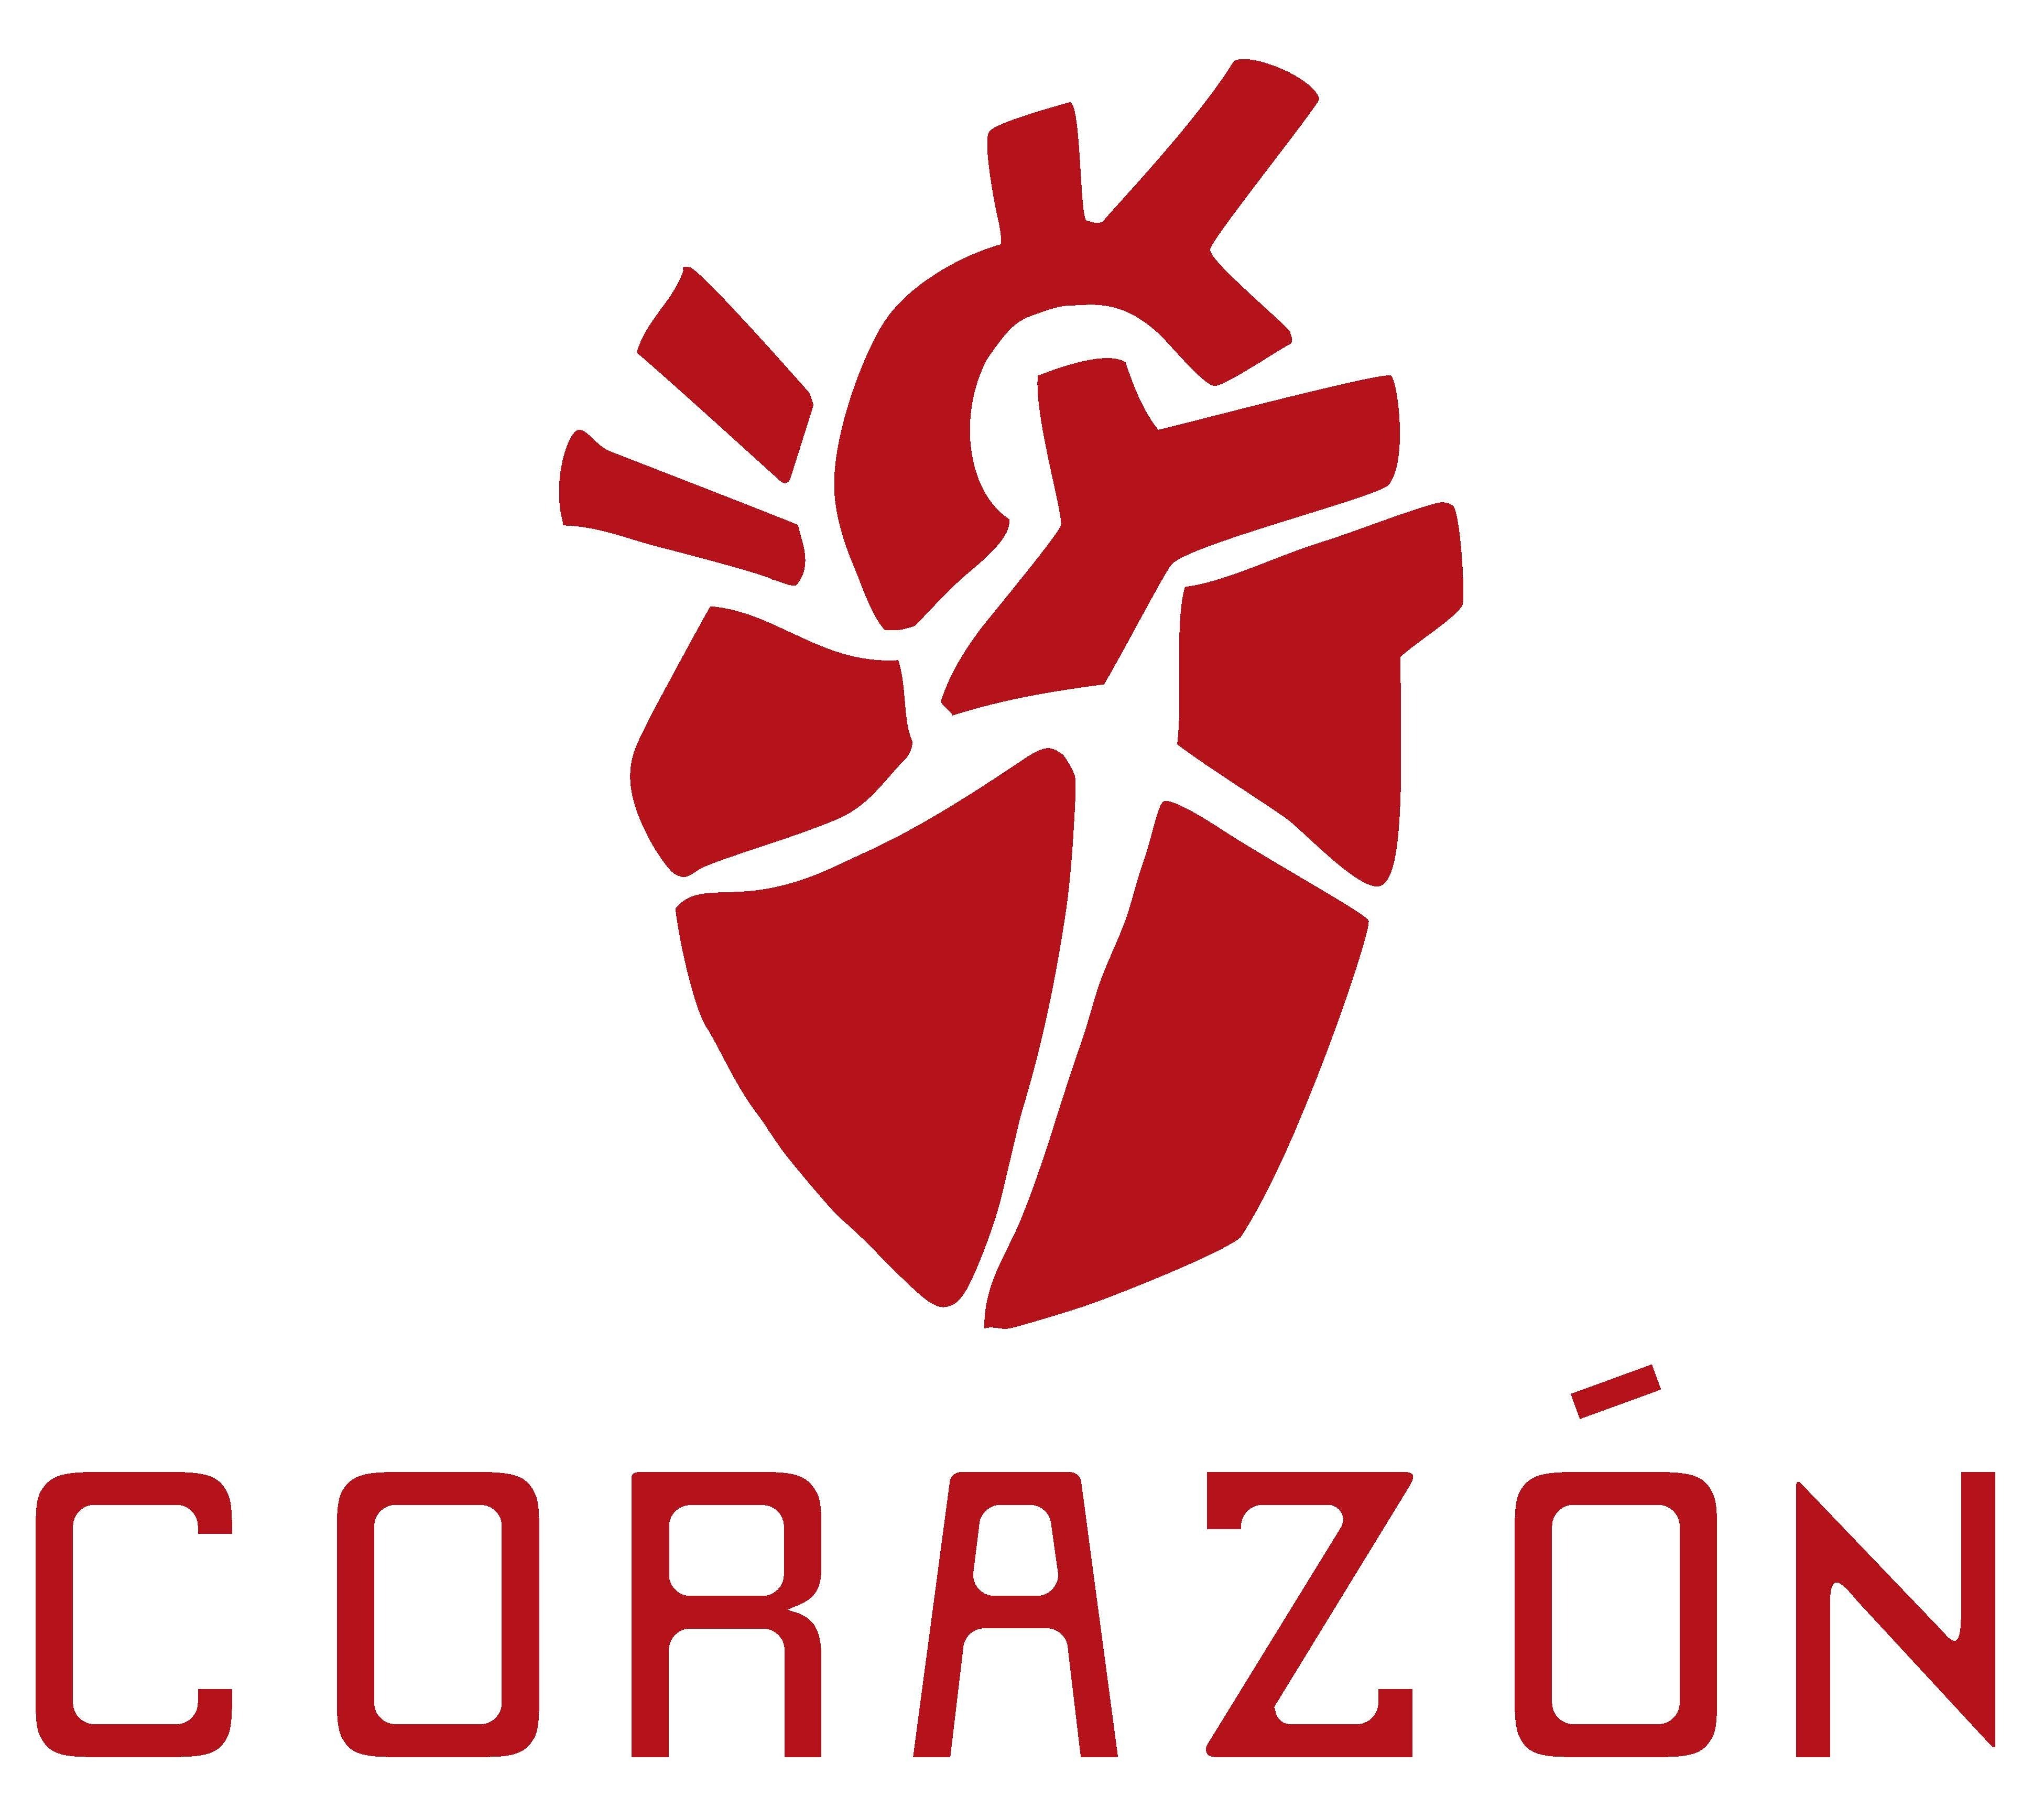 Corazon Heart